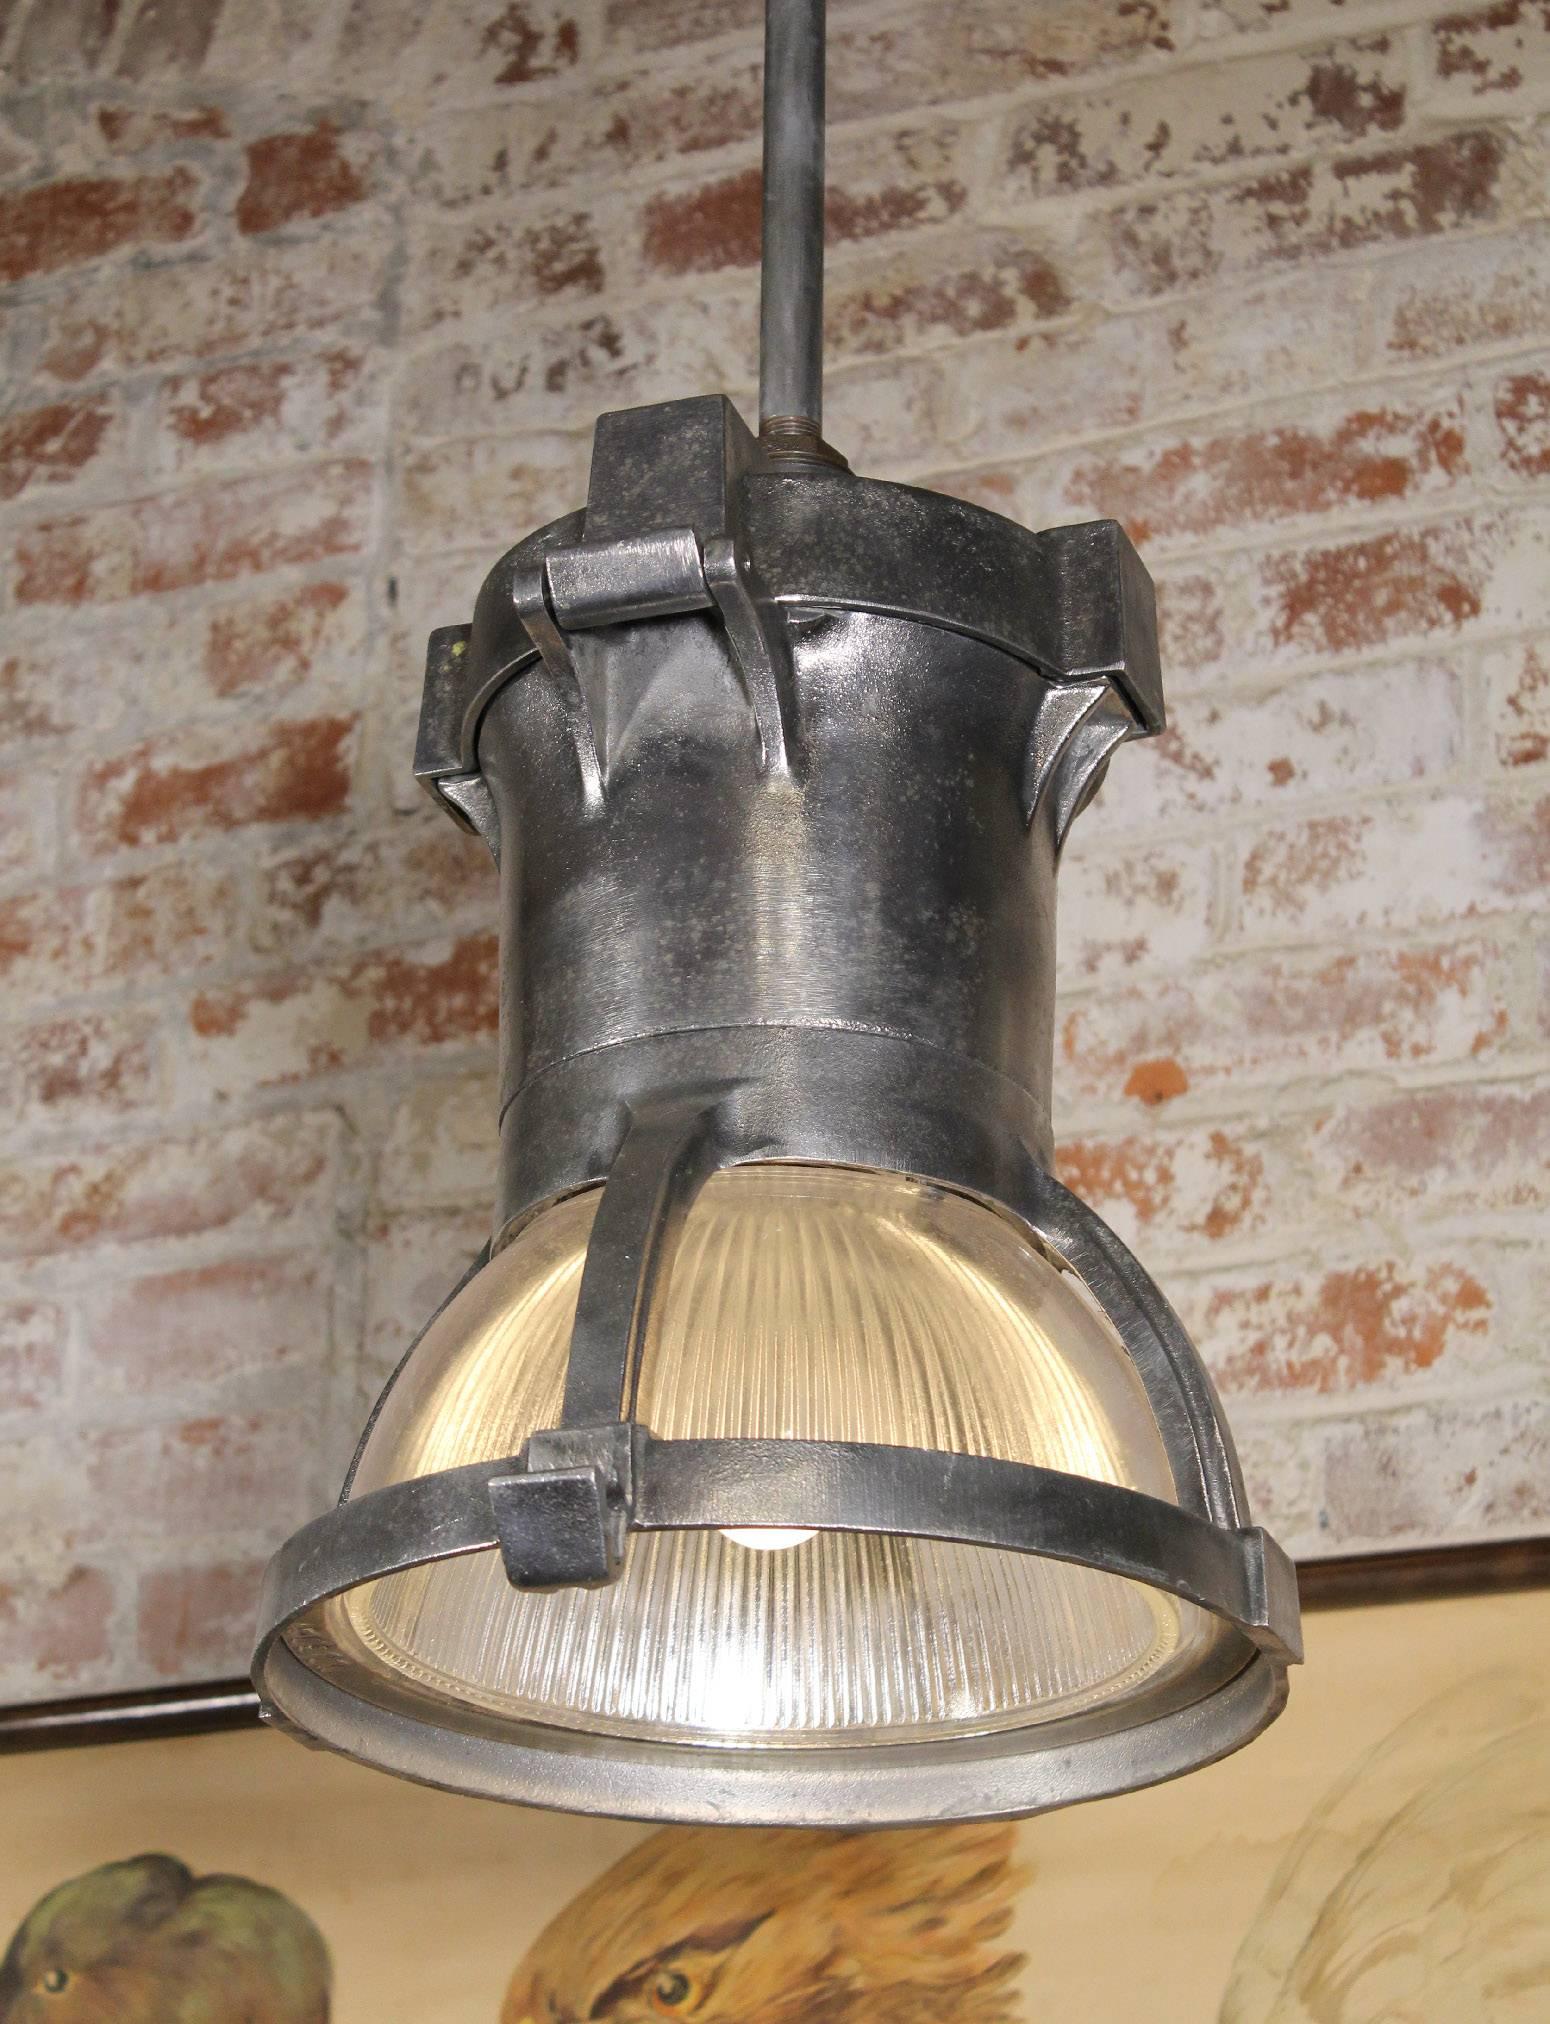 Cast iron and ribbed glass overhead pendant light, ceiling lamp, overhead light. Glass diameter measures 10